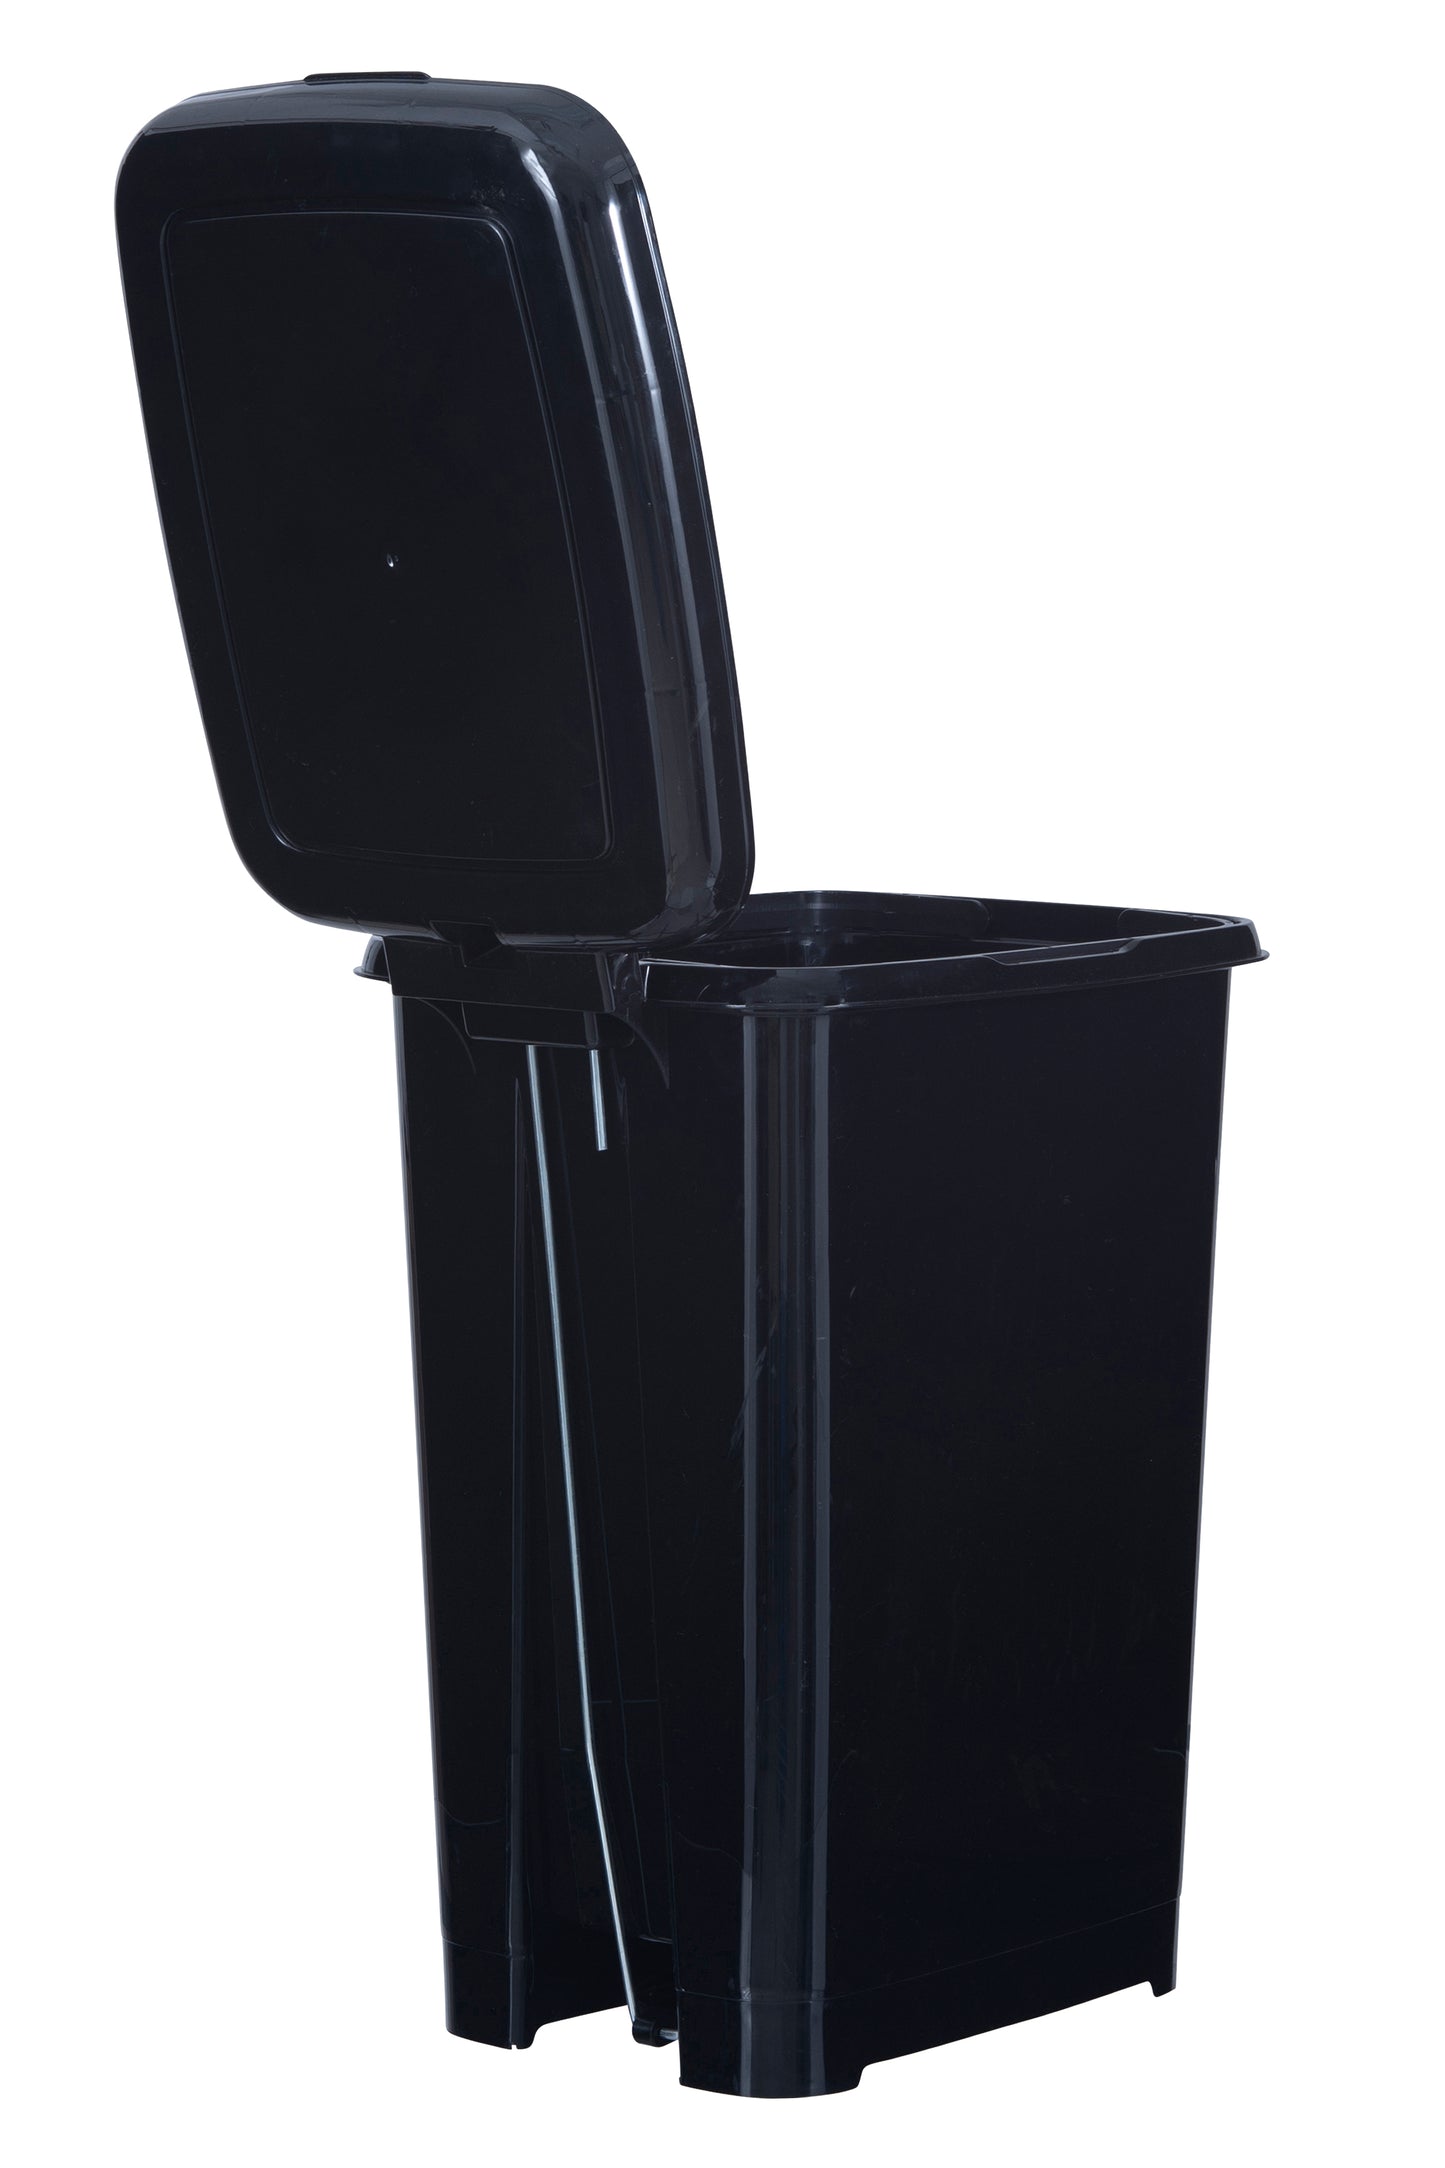 Slim Pedal Trash Can, 16 Qt - Black